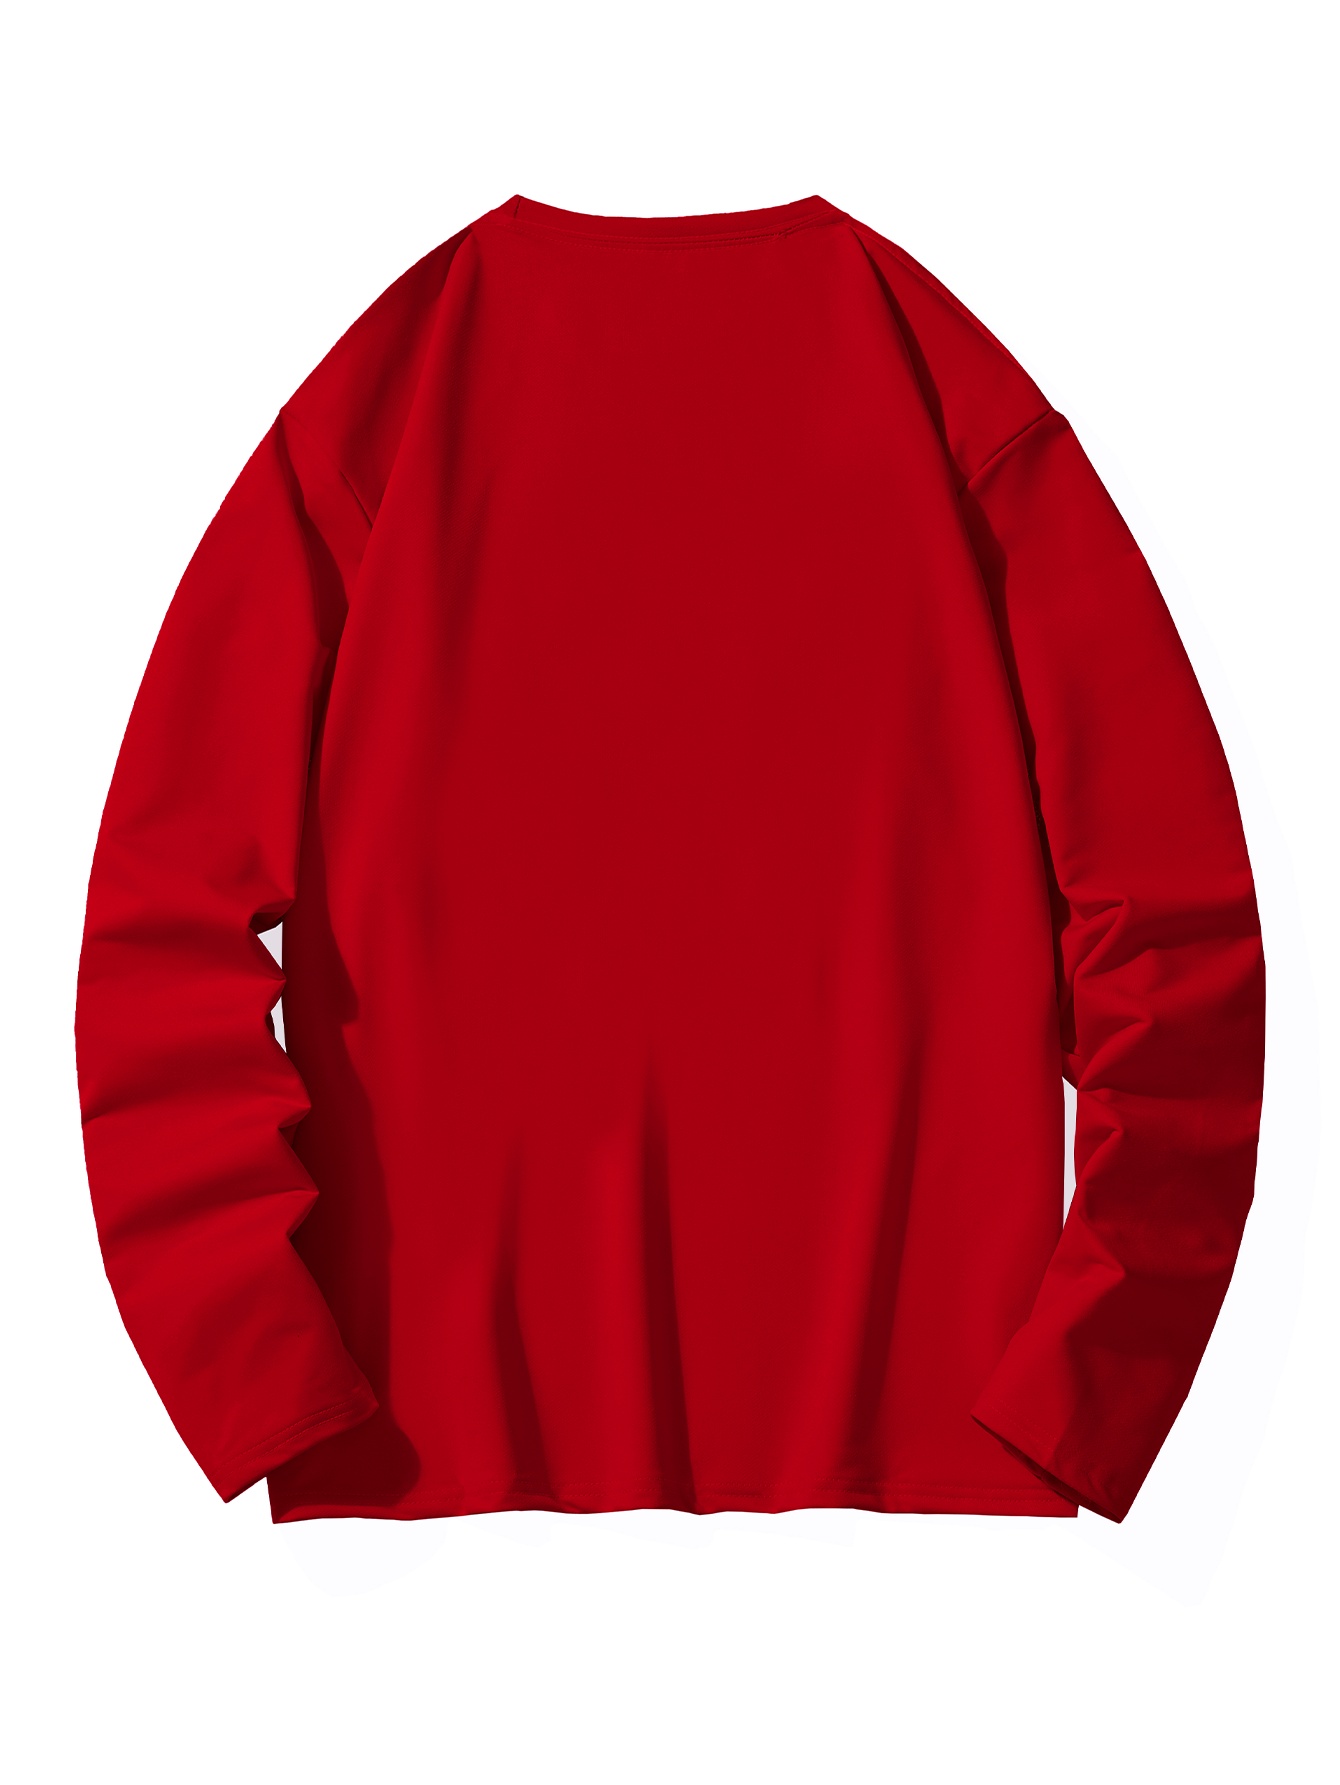 Product nBA Youngboy Supreme Shirt NBA Youngboy Shirt NBA Youngboy Supreme  T Shirt, hoodie, sweater, long sleeve and tank top